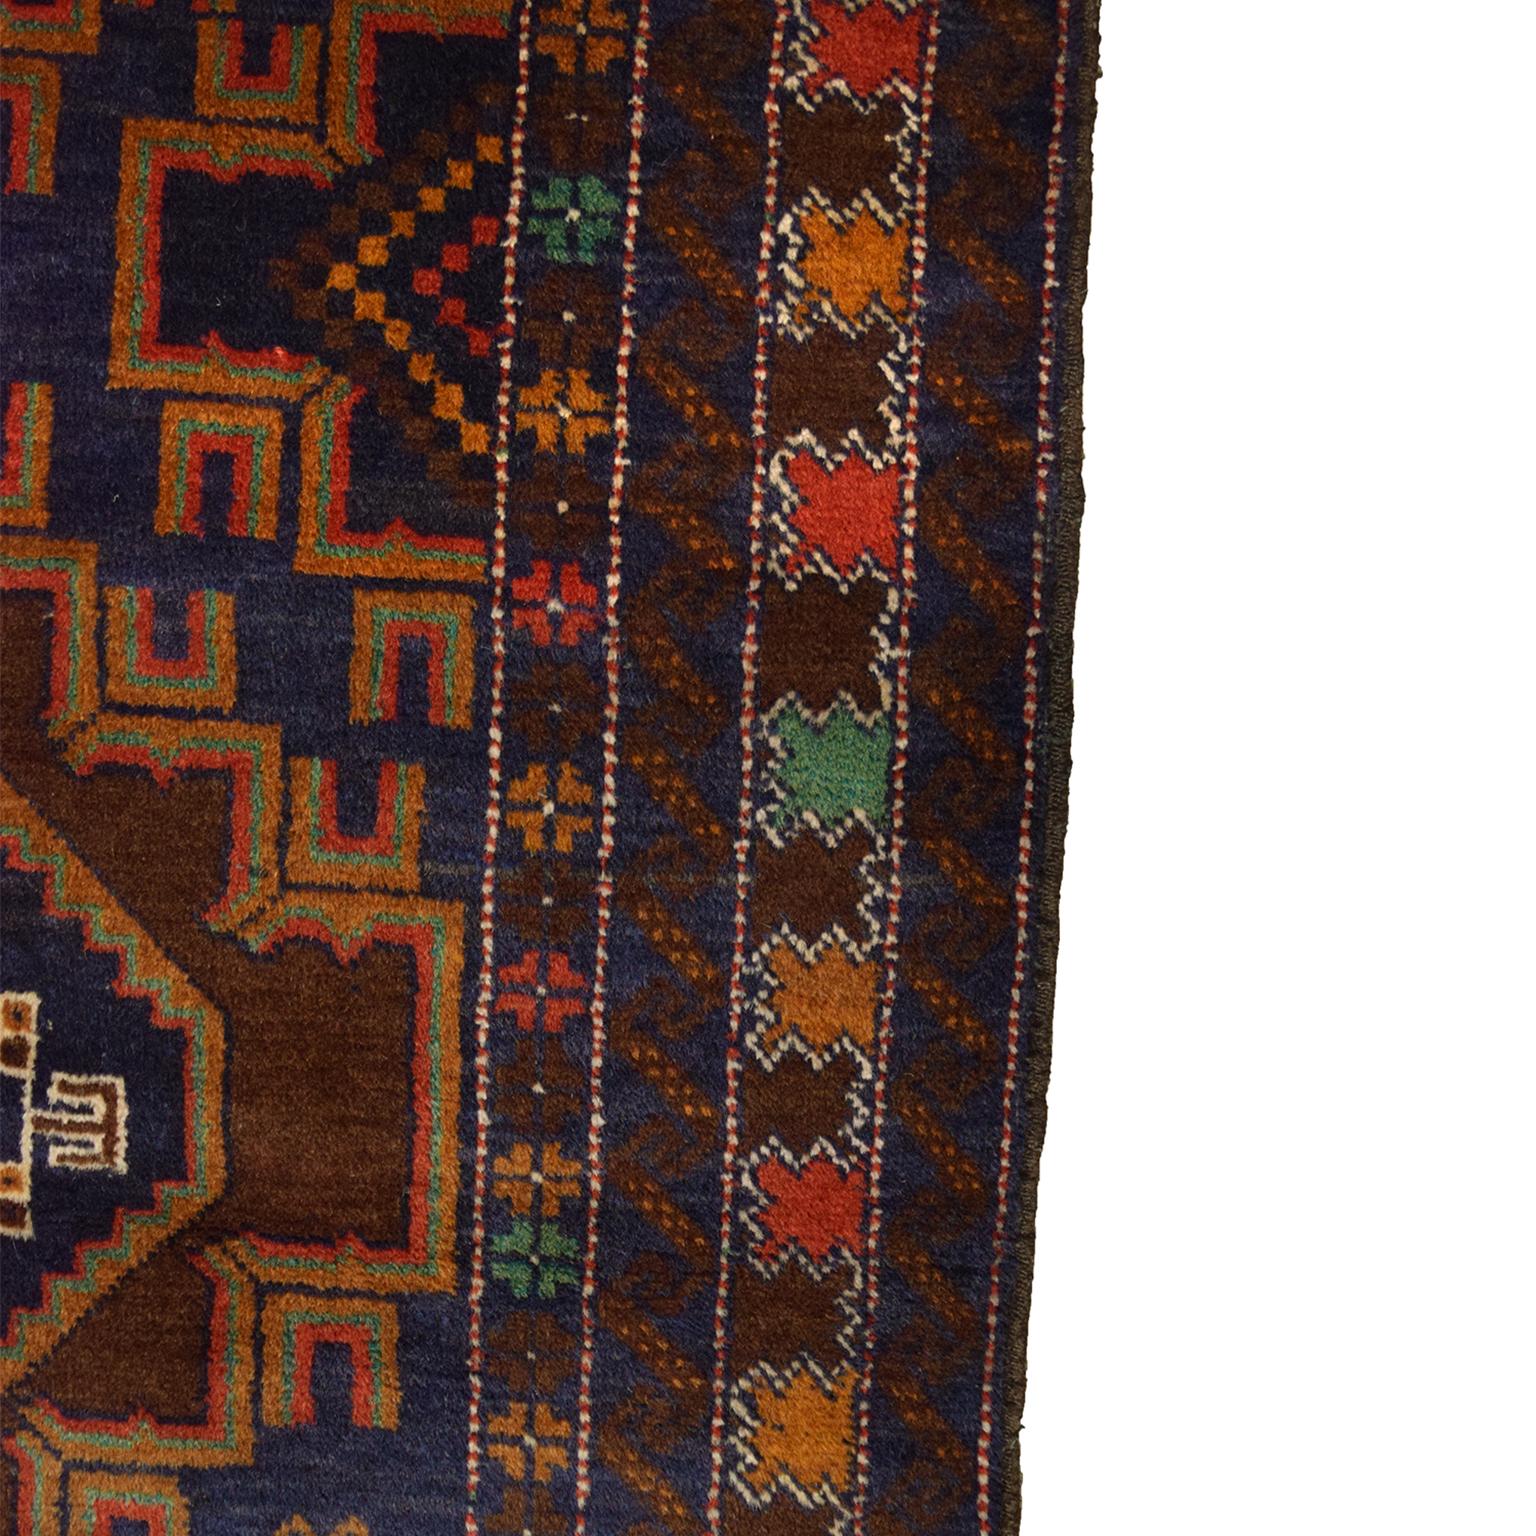 Tribal Wool Persian Balouchi Rug, Geometric, Medallions, 3' x 5' For Sale